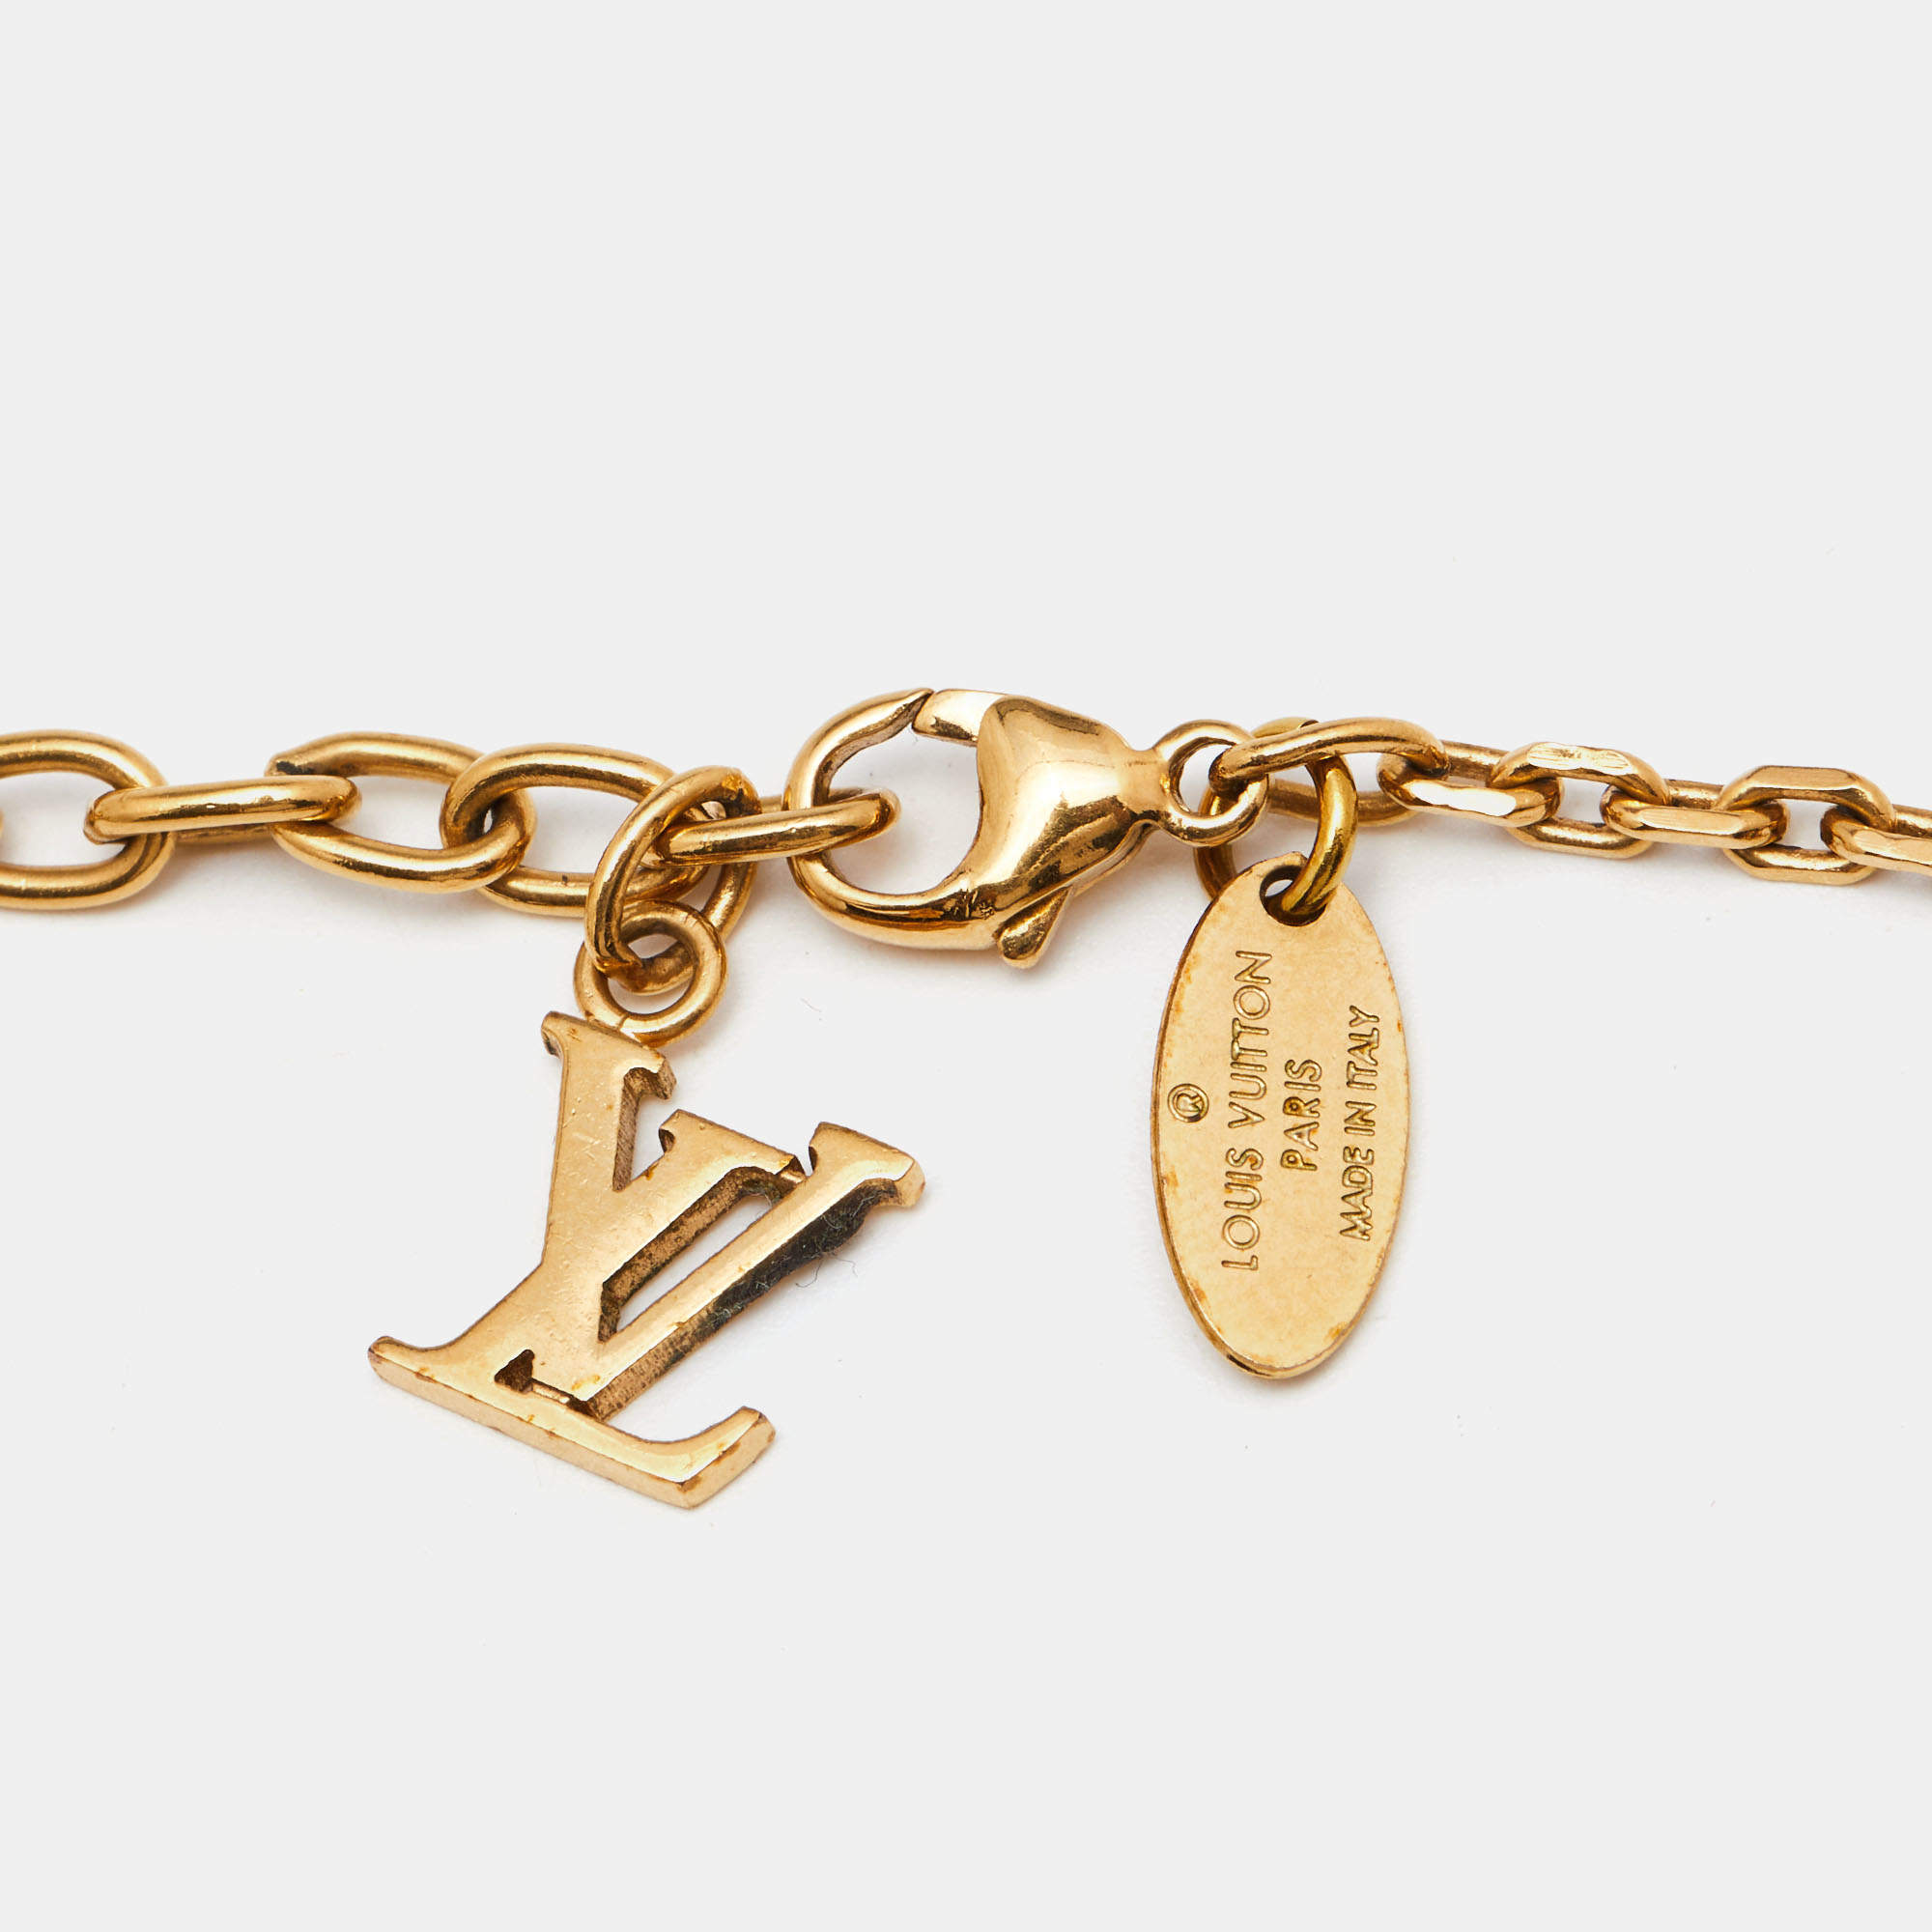 Louis Vuitton Gamble Station Bracelet